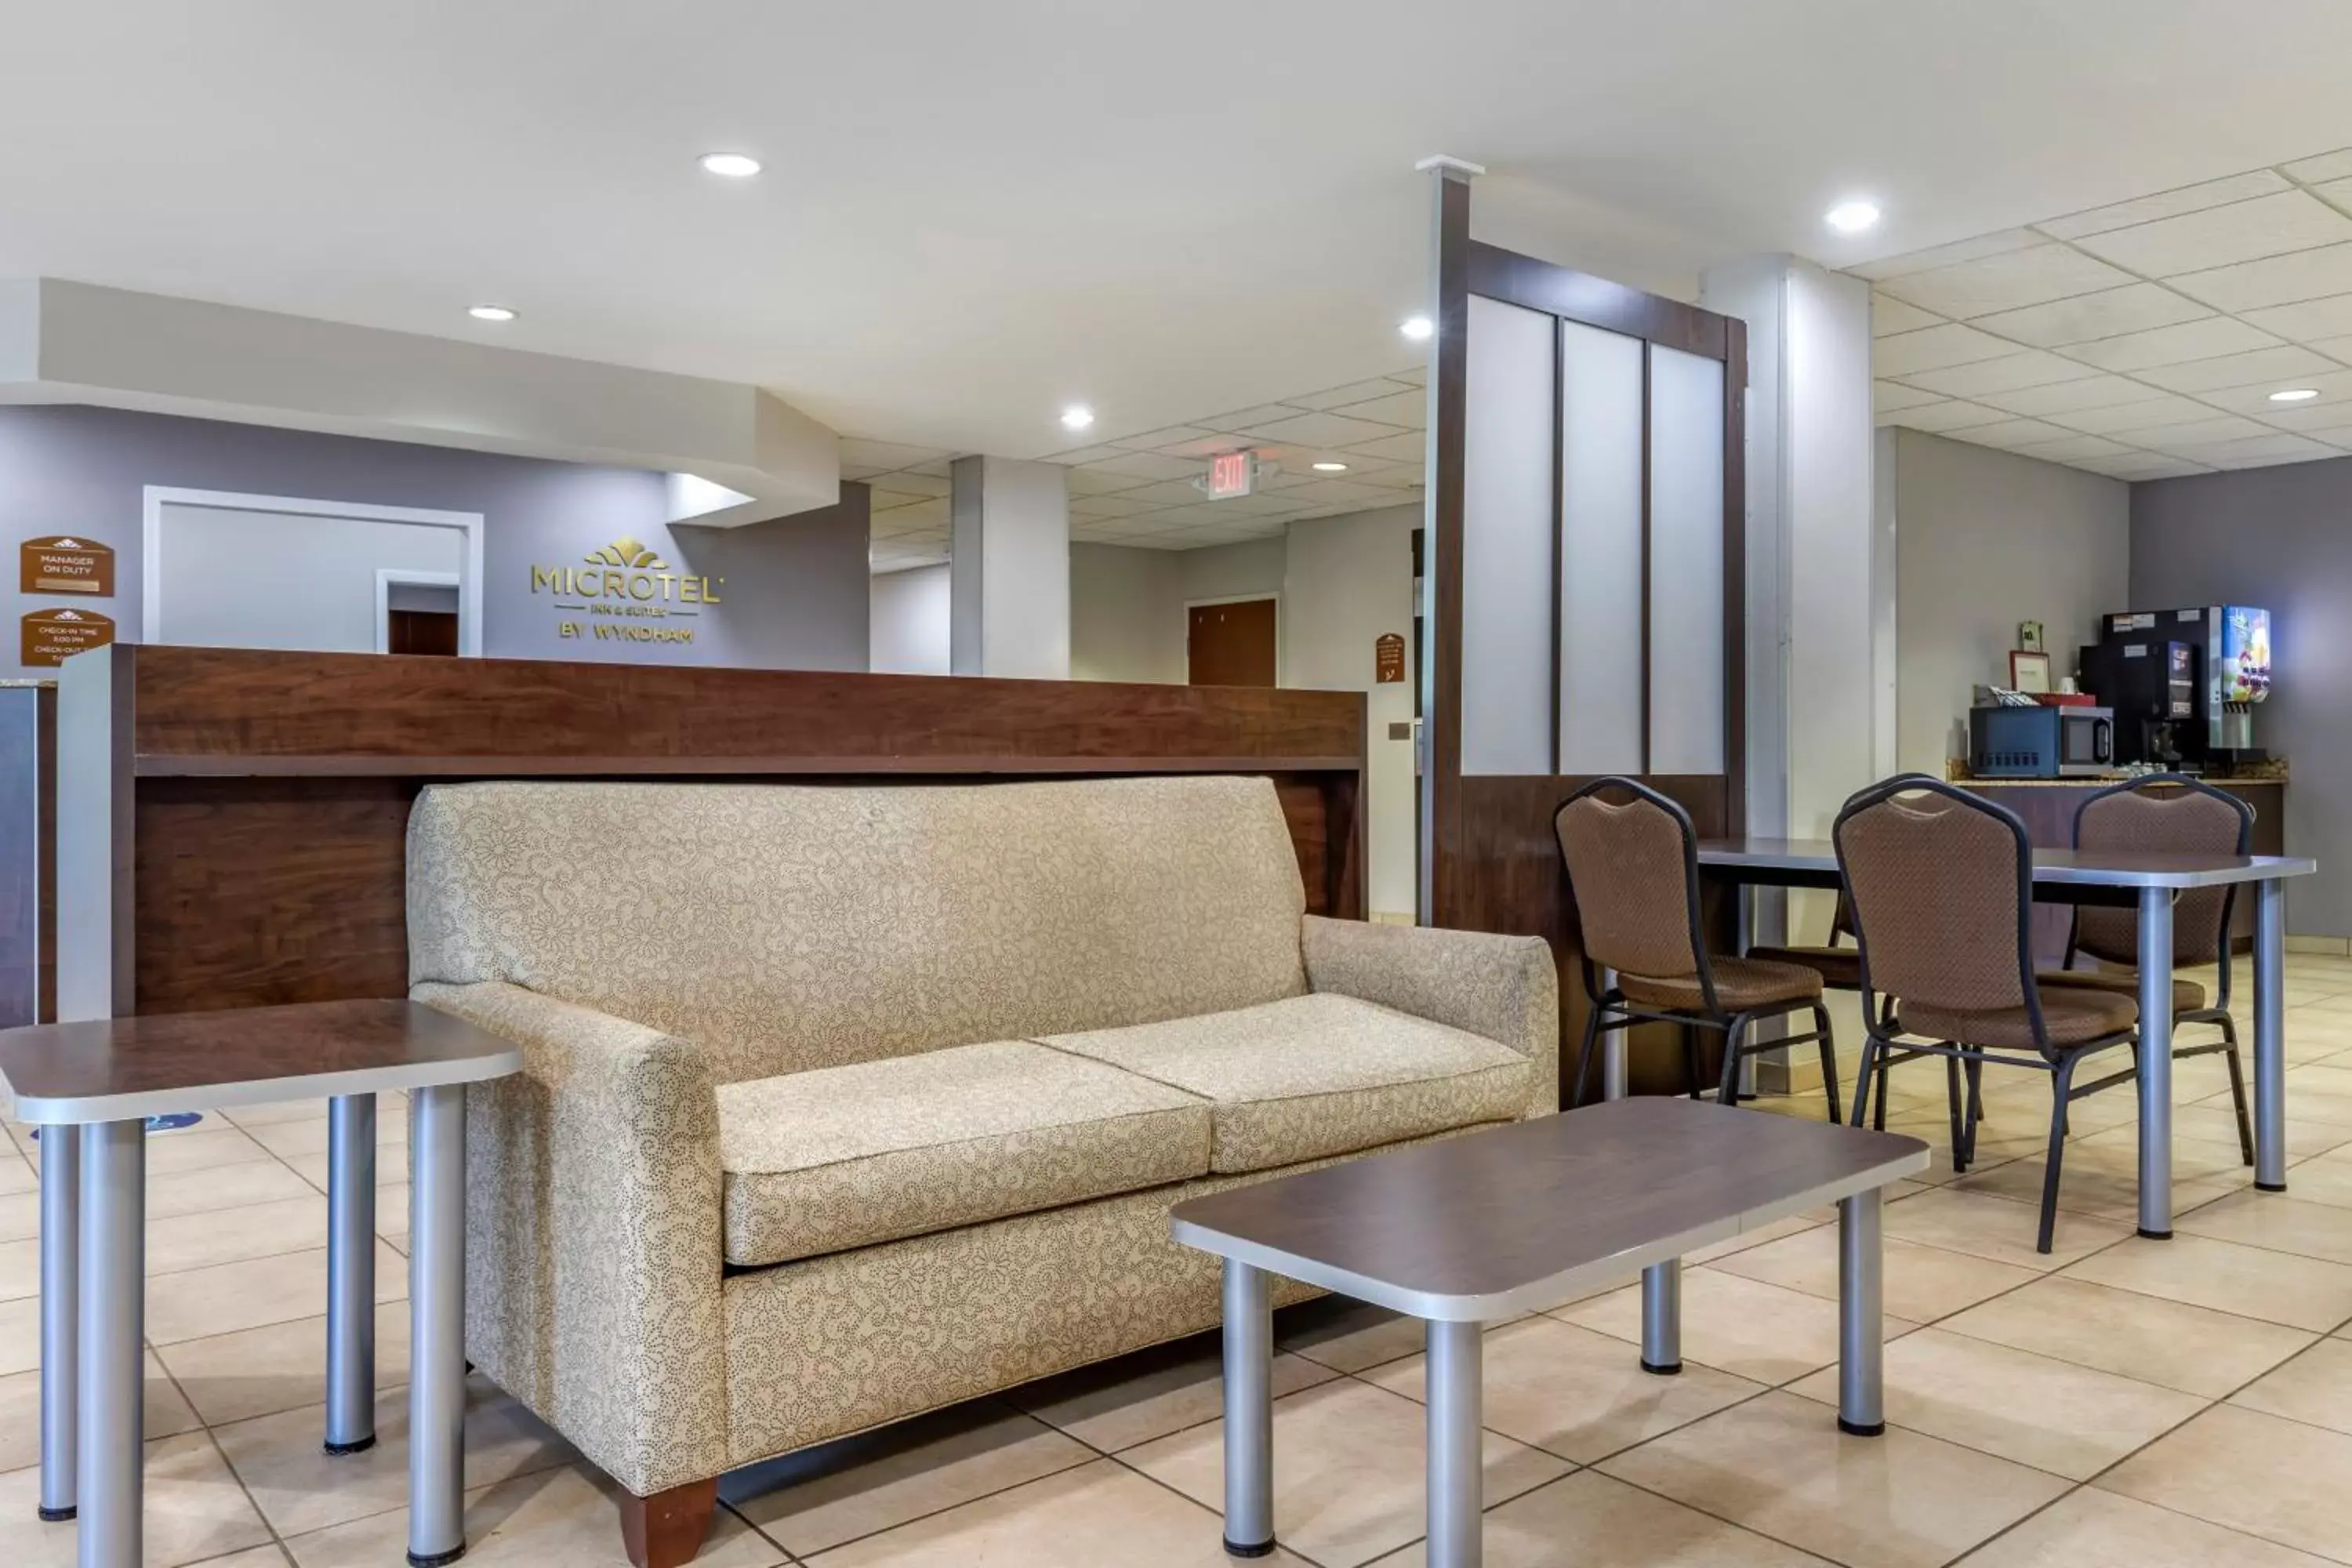 Lobby or reception, Lobby/Reception in Microtel Inn & Suites Dillsboro/Sylva